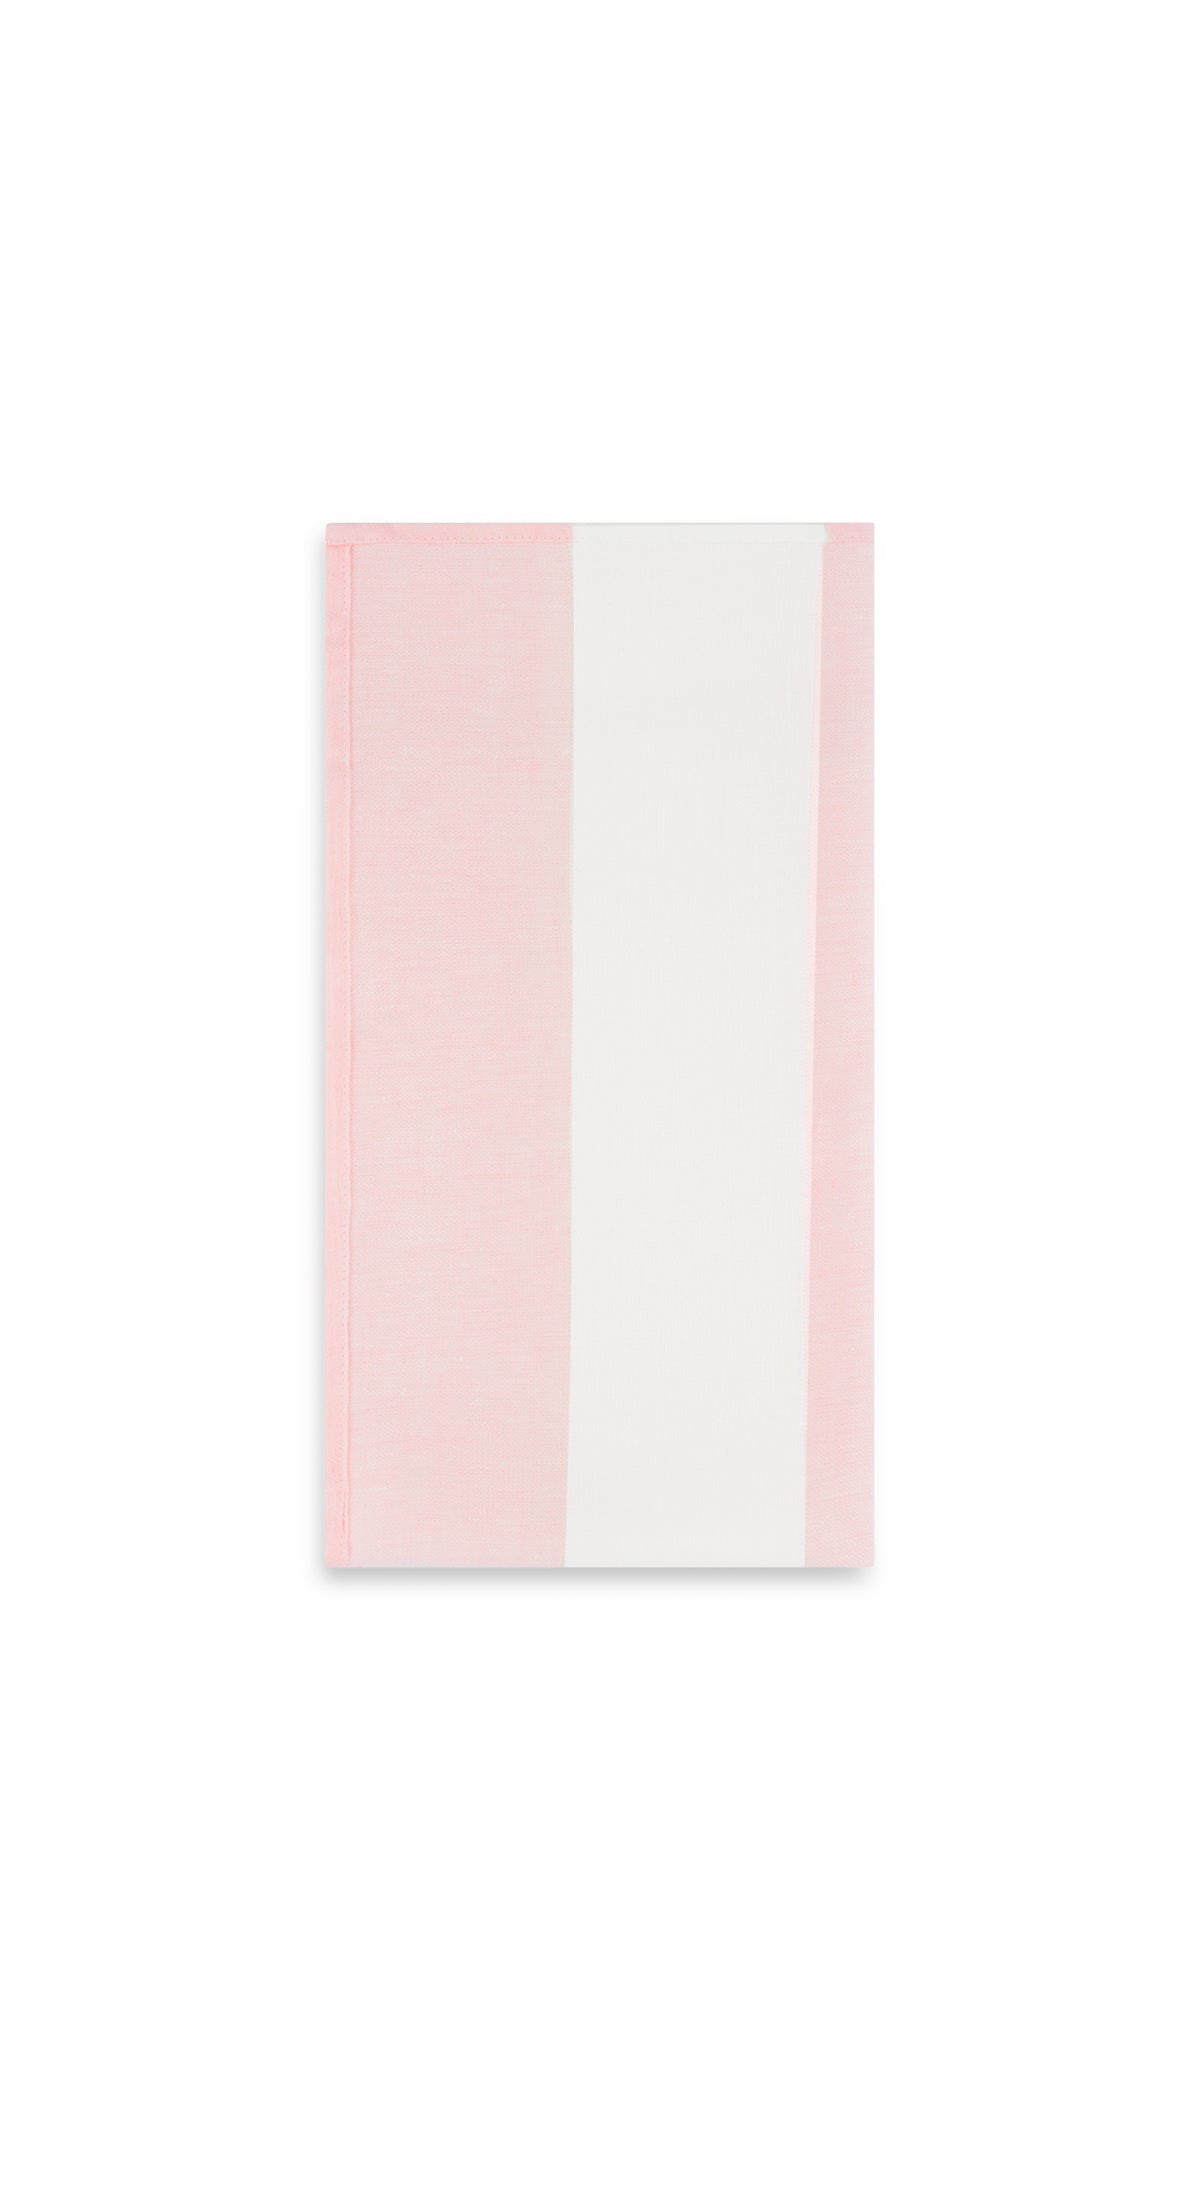 Fine Irish Linen Tea Towel in Pink and White Stripe, 58x73cm